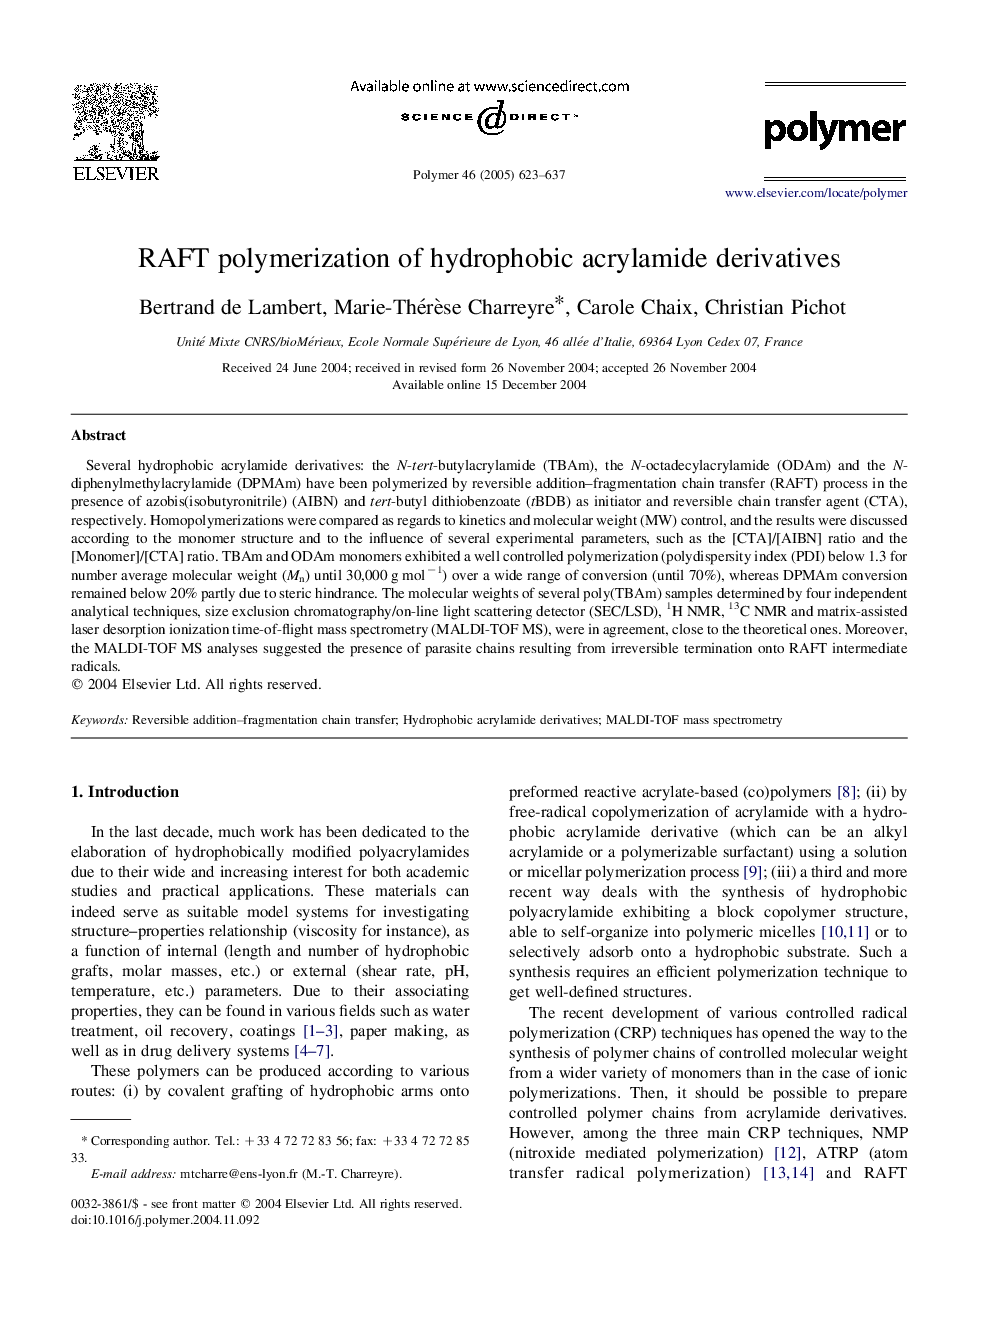 RAFT polymerization of hydrophobic acrylamide derivatives